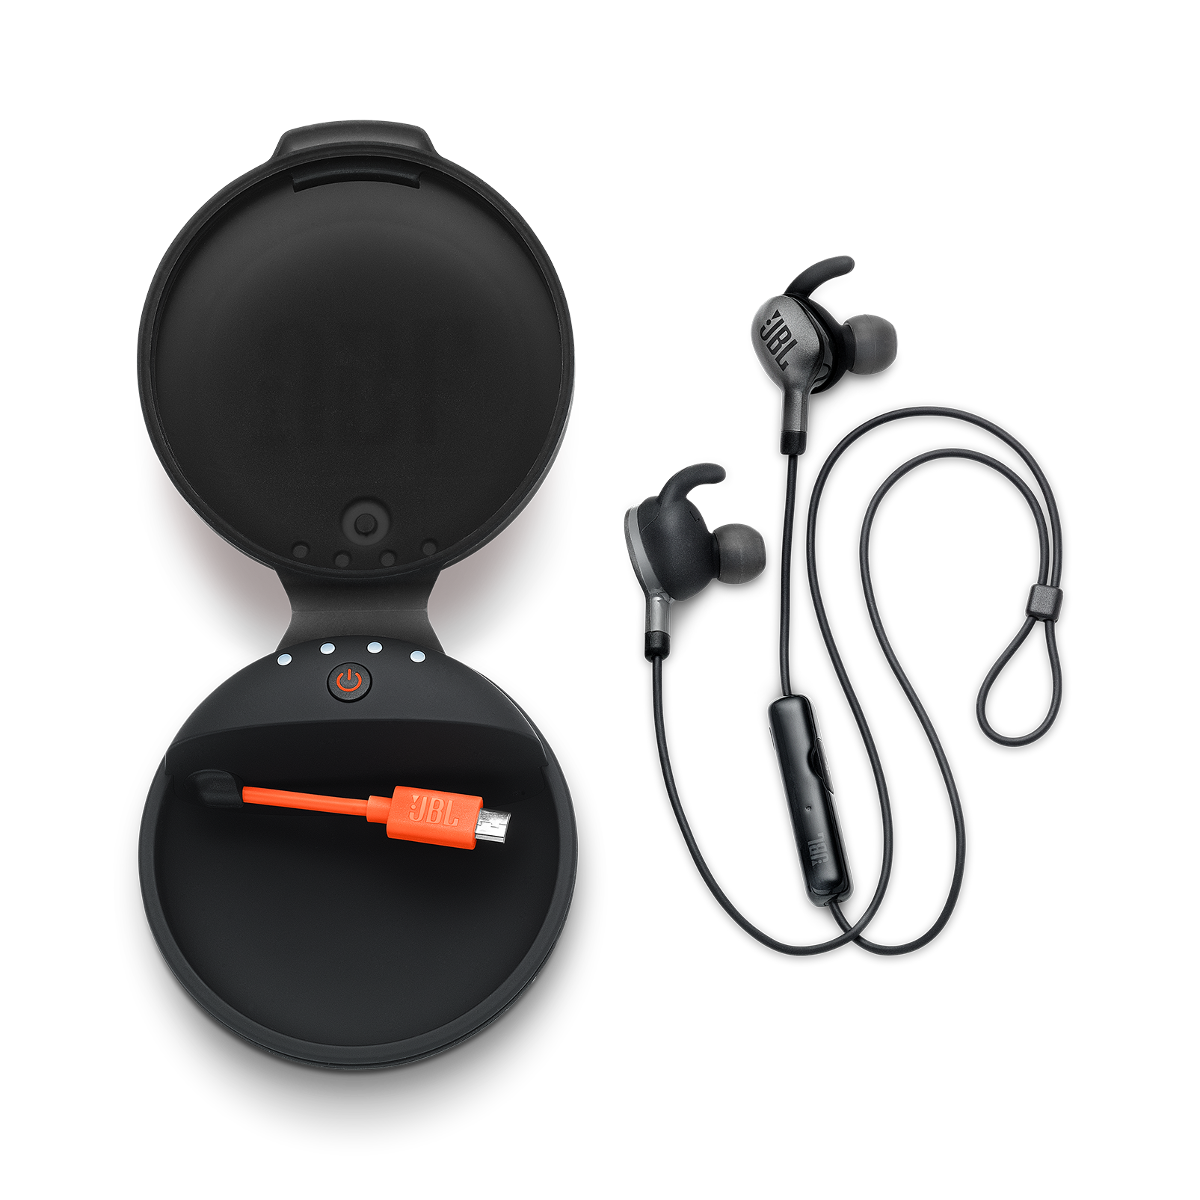 JBL Headphones Charging Case / JBLHPCCBLK / Black